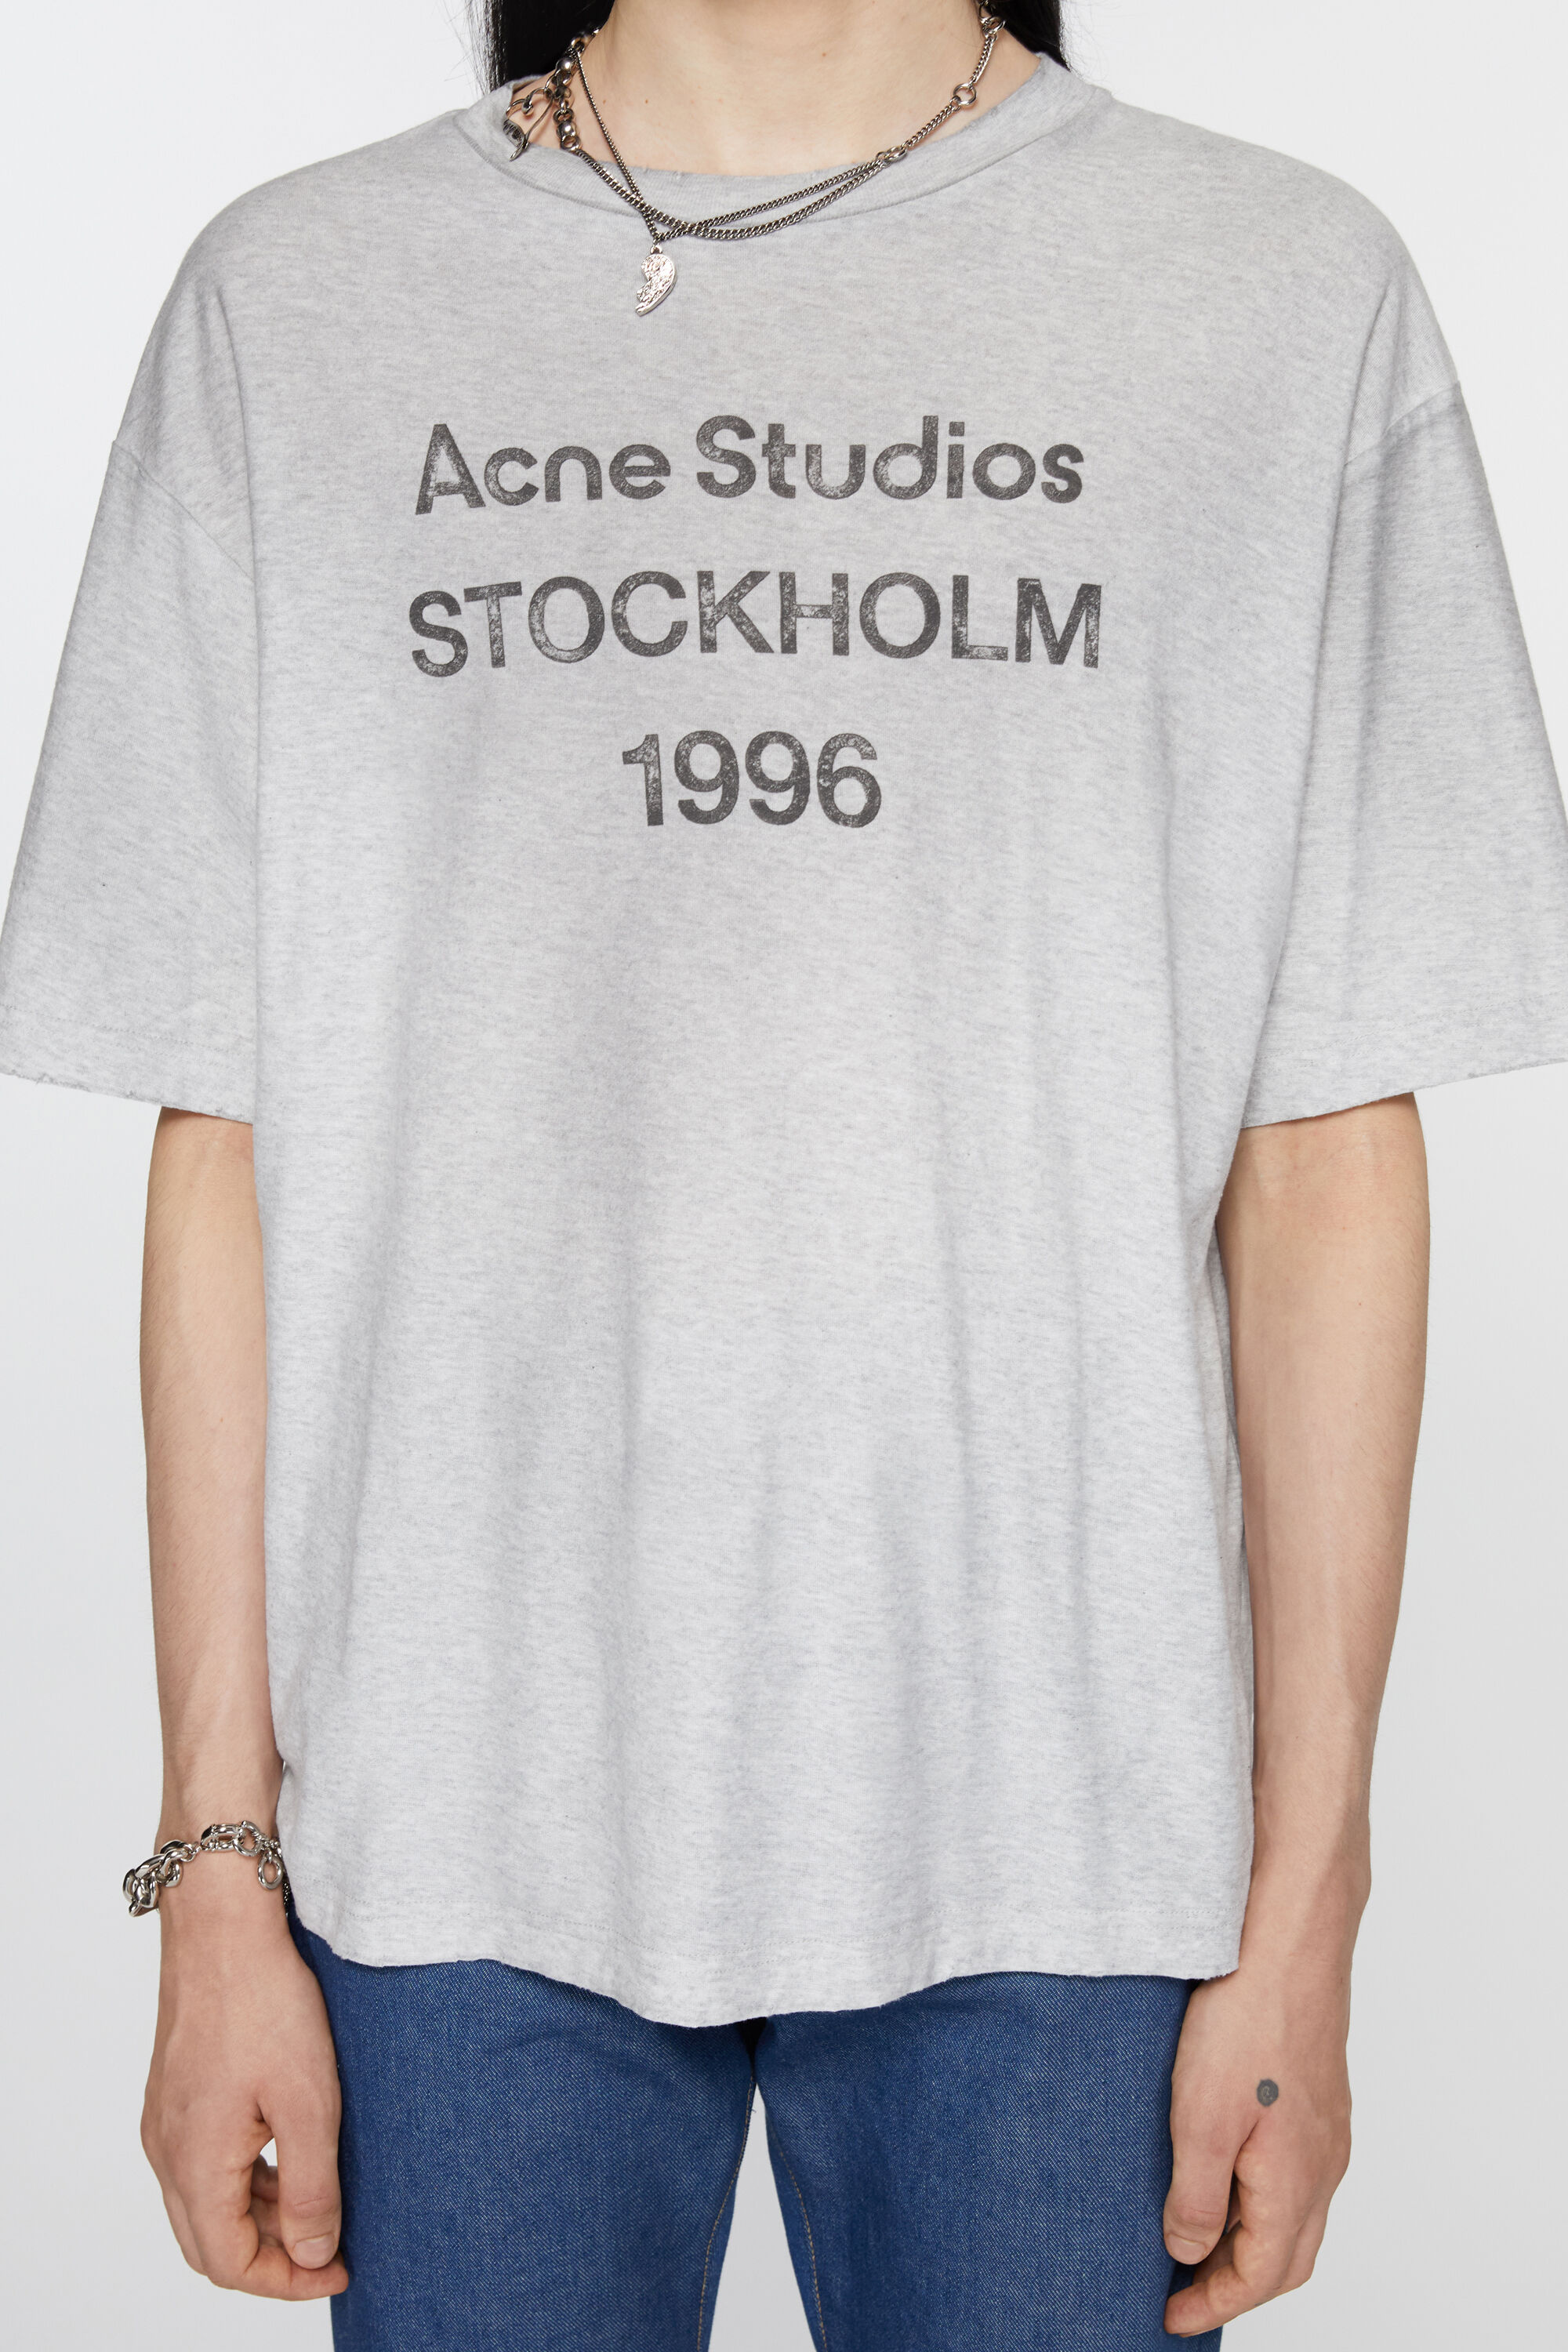 Acne Studios ロゴプリントTシャツ ホワイト メンズ XSサイズ ...